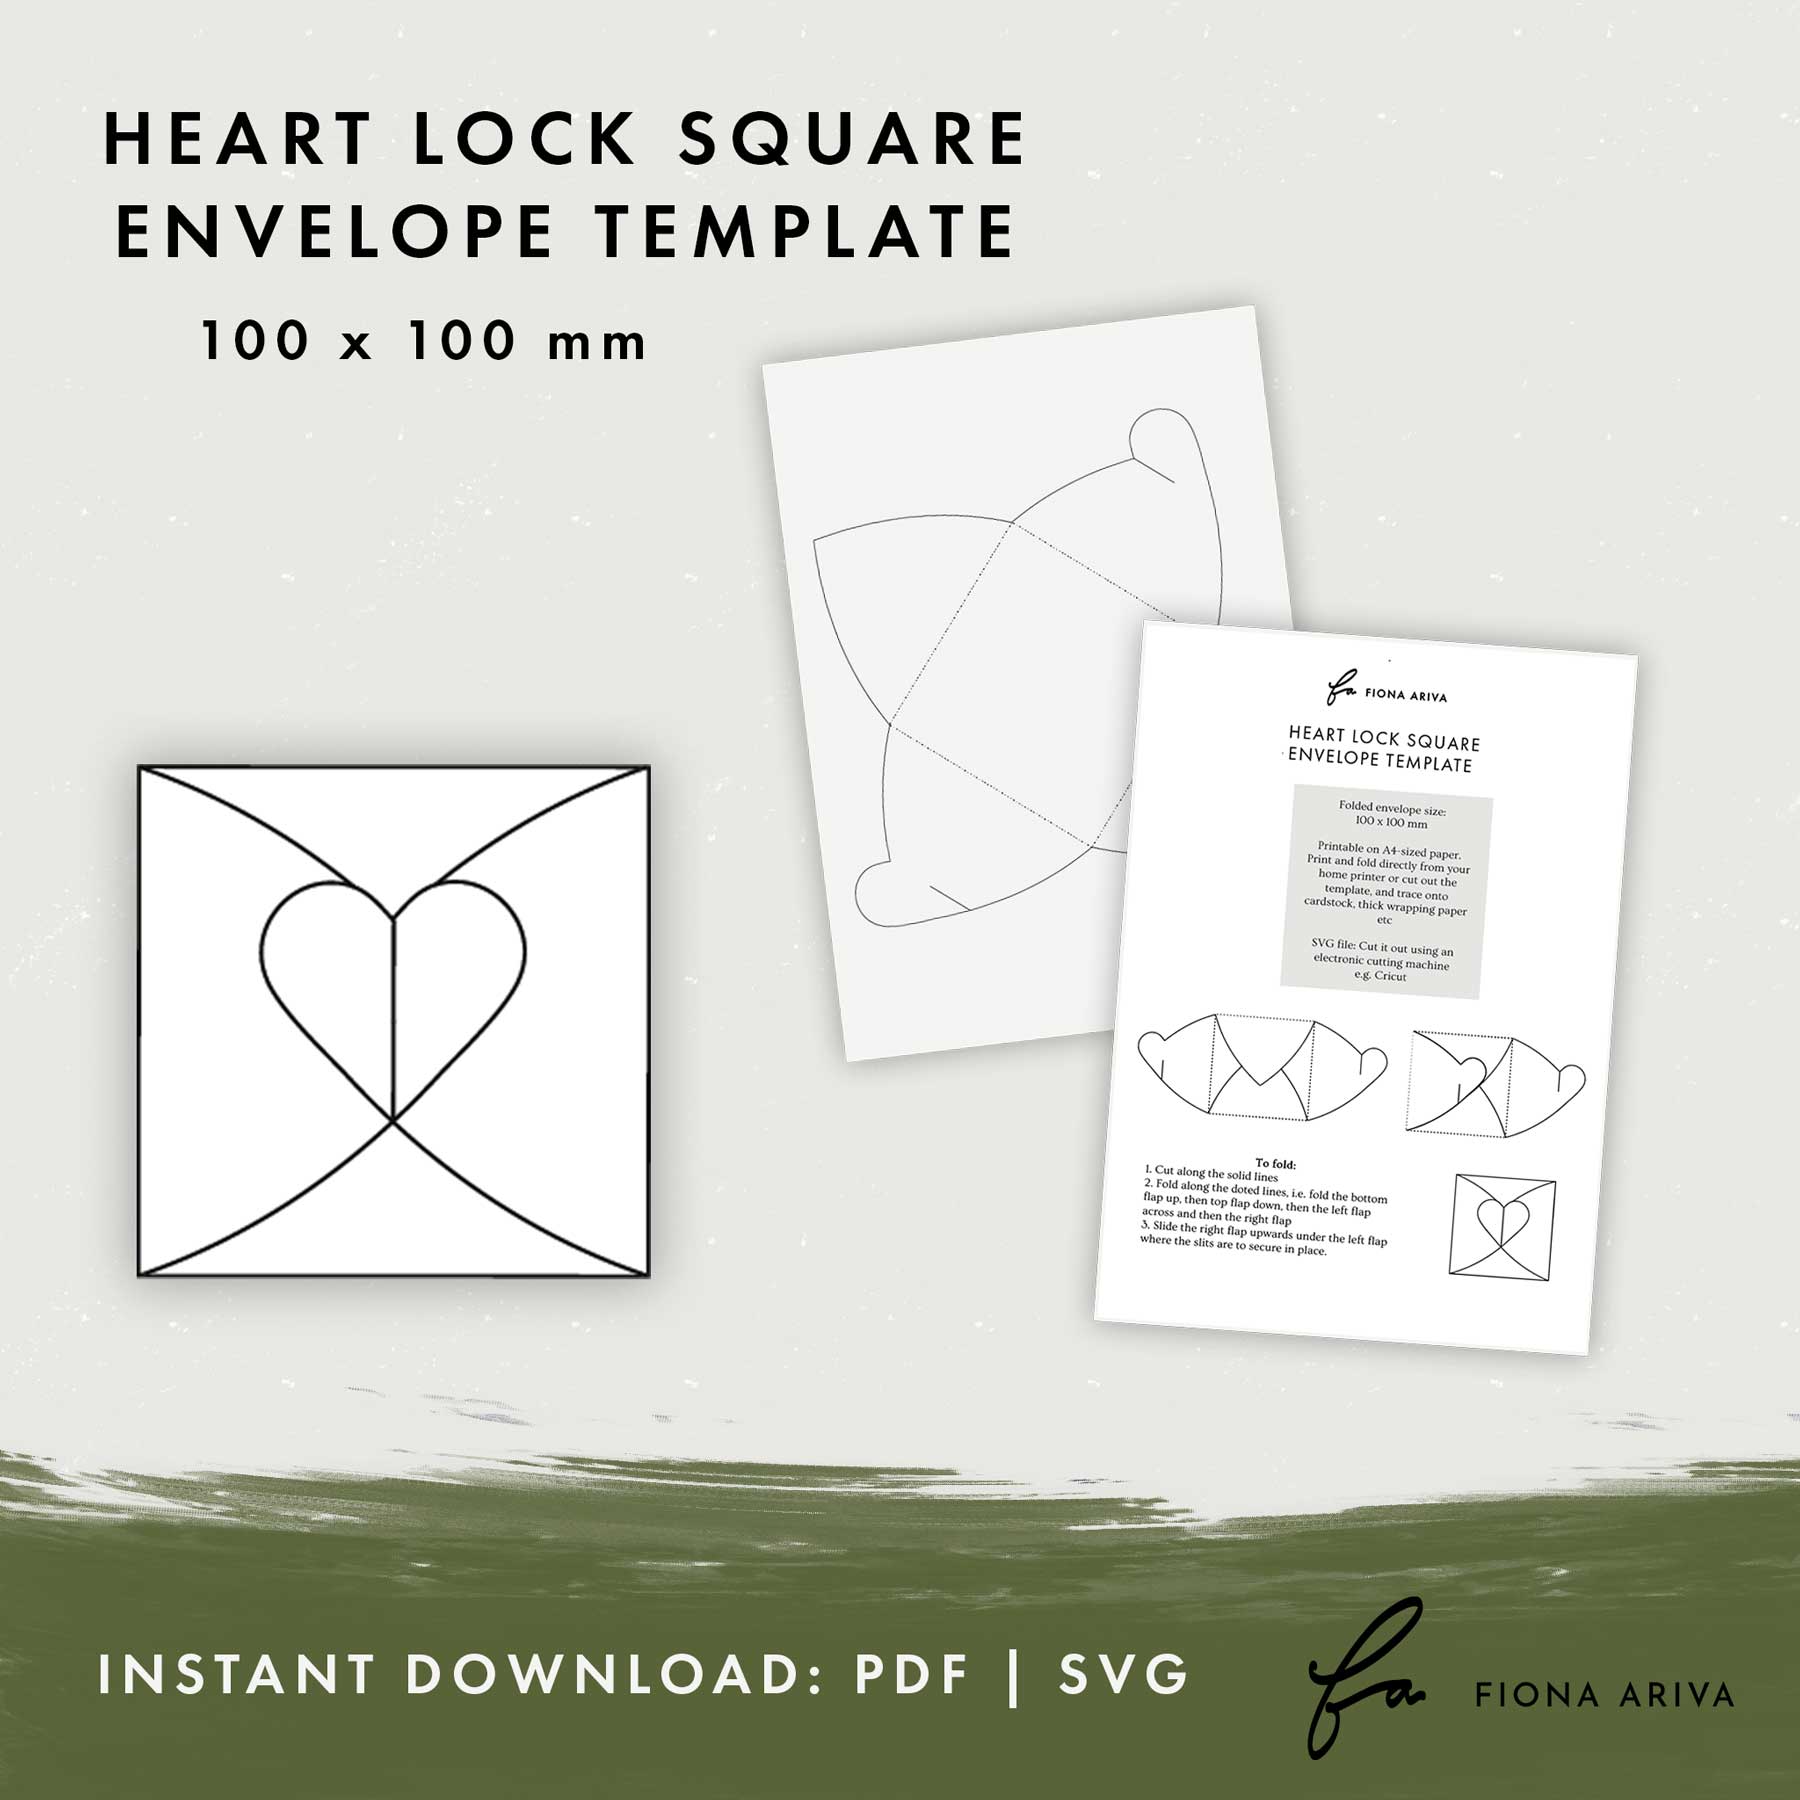 Heart Lock Square Envelope Template 100 x 100mm (Instant Download - PDF & SVG)